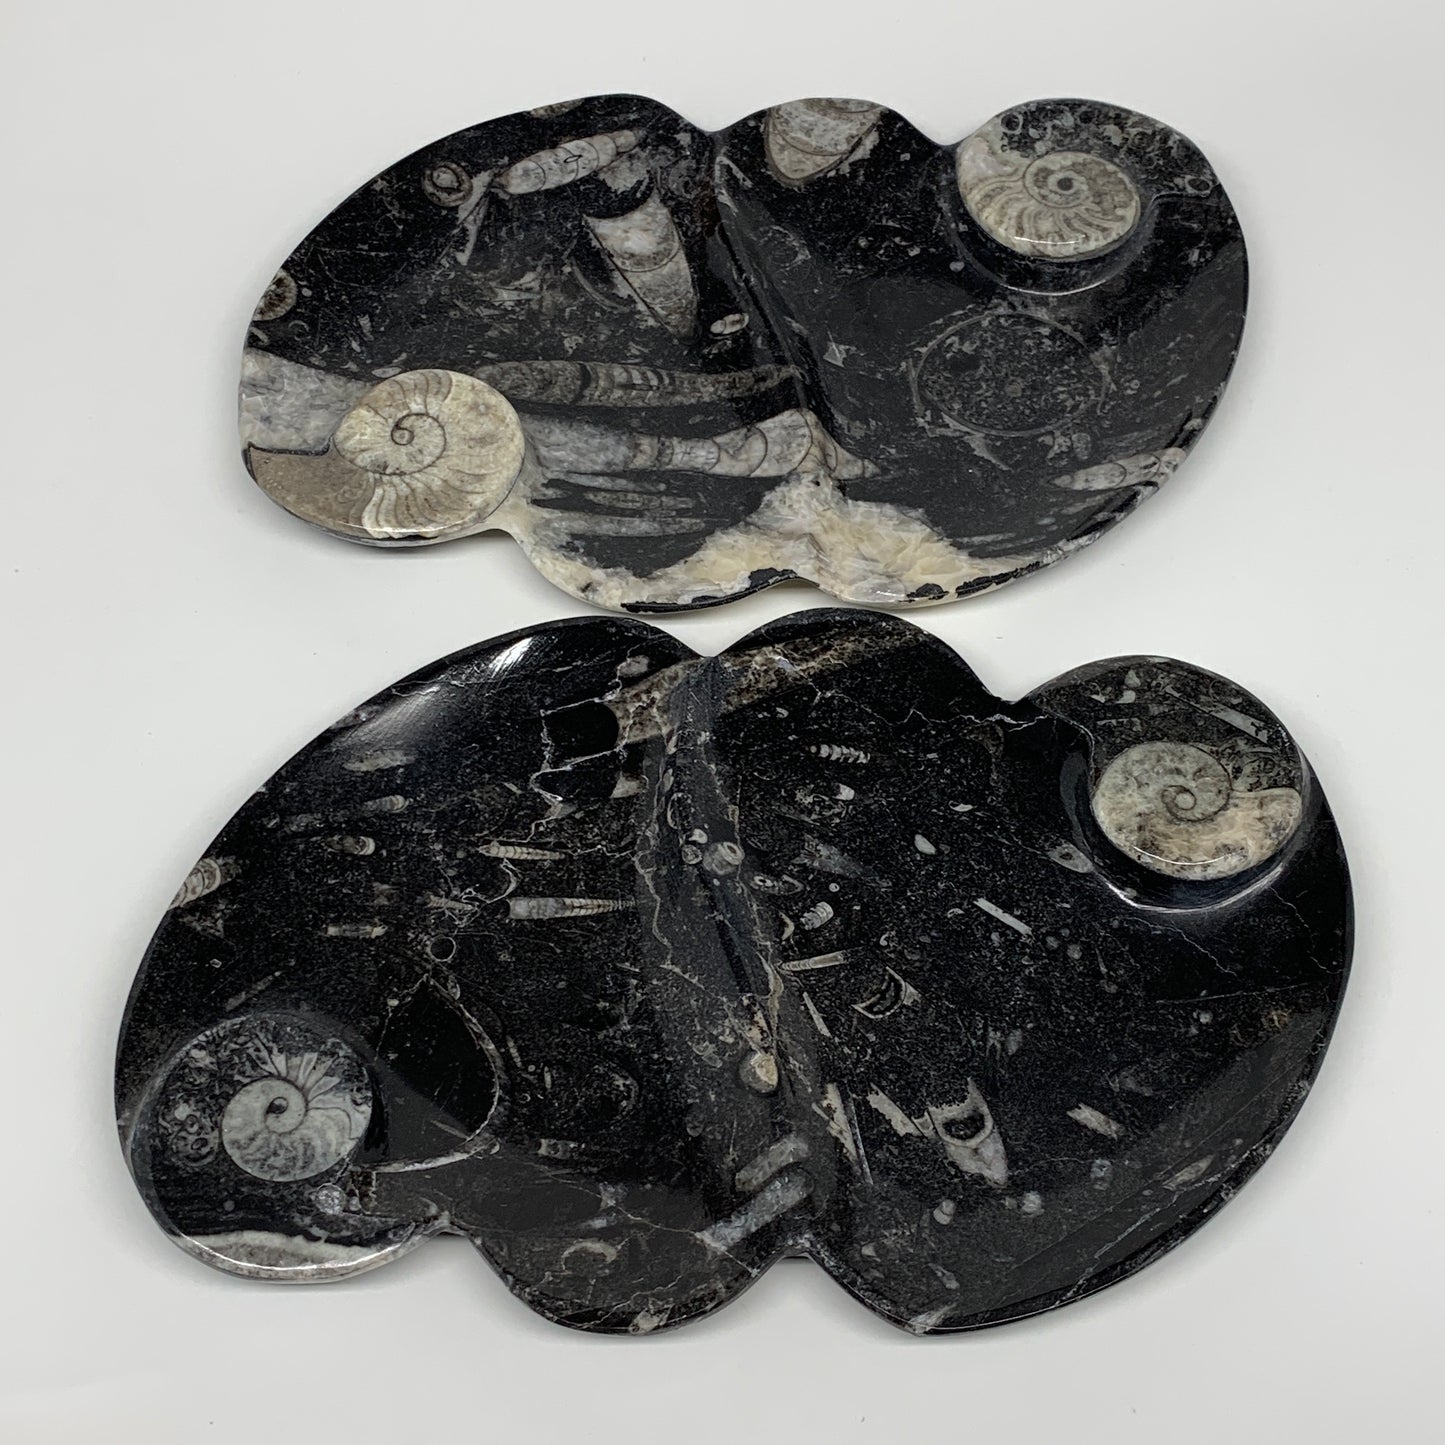 2pcs Set,8.5"x5.5" Double Heart Fossils Orthoceras Ammonite Bowls @Morocco,B8521